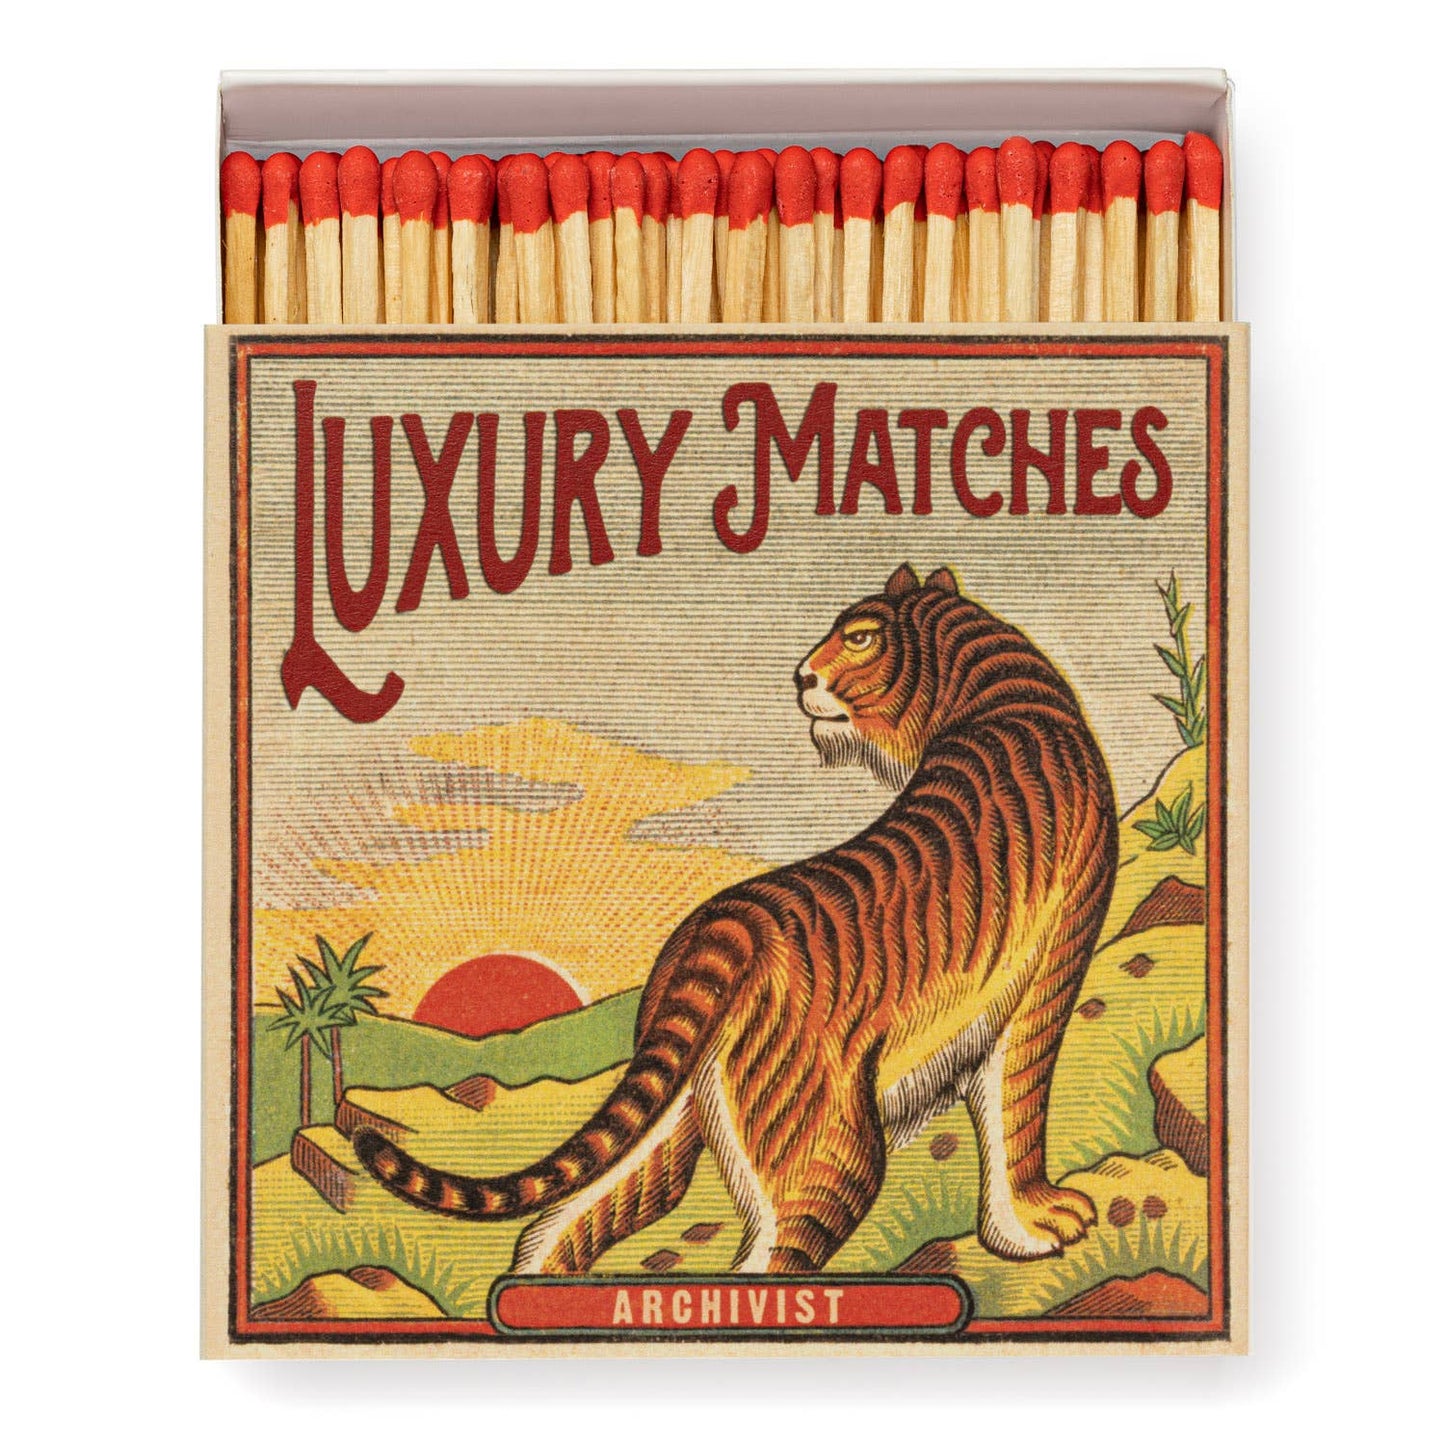 New Tiger Square Matchbox